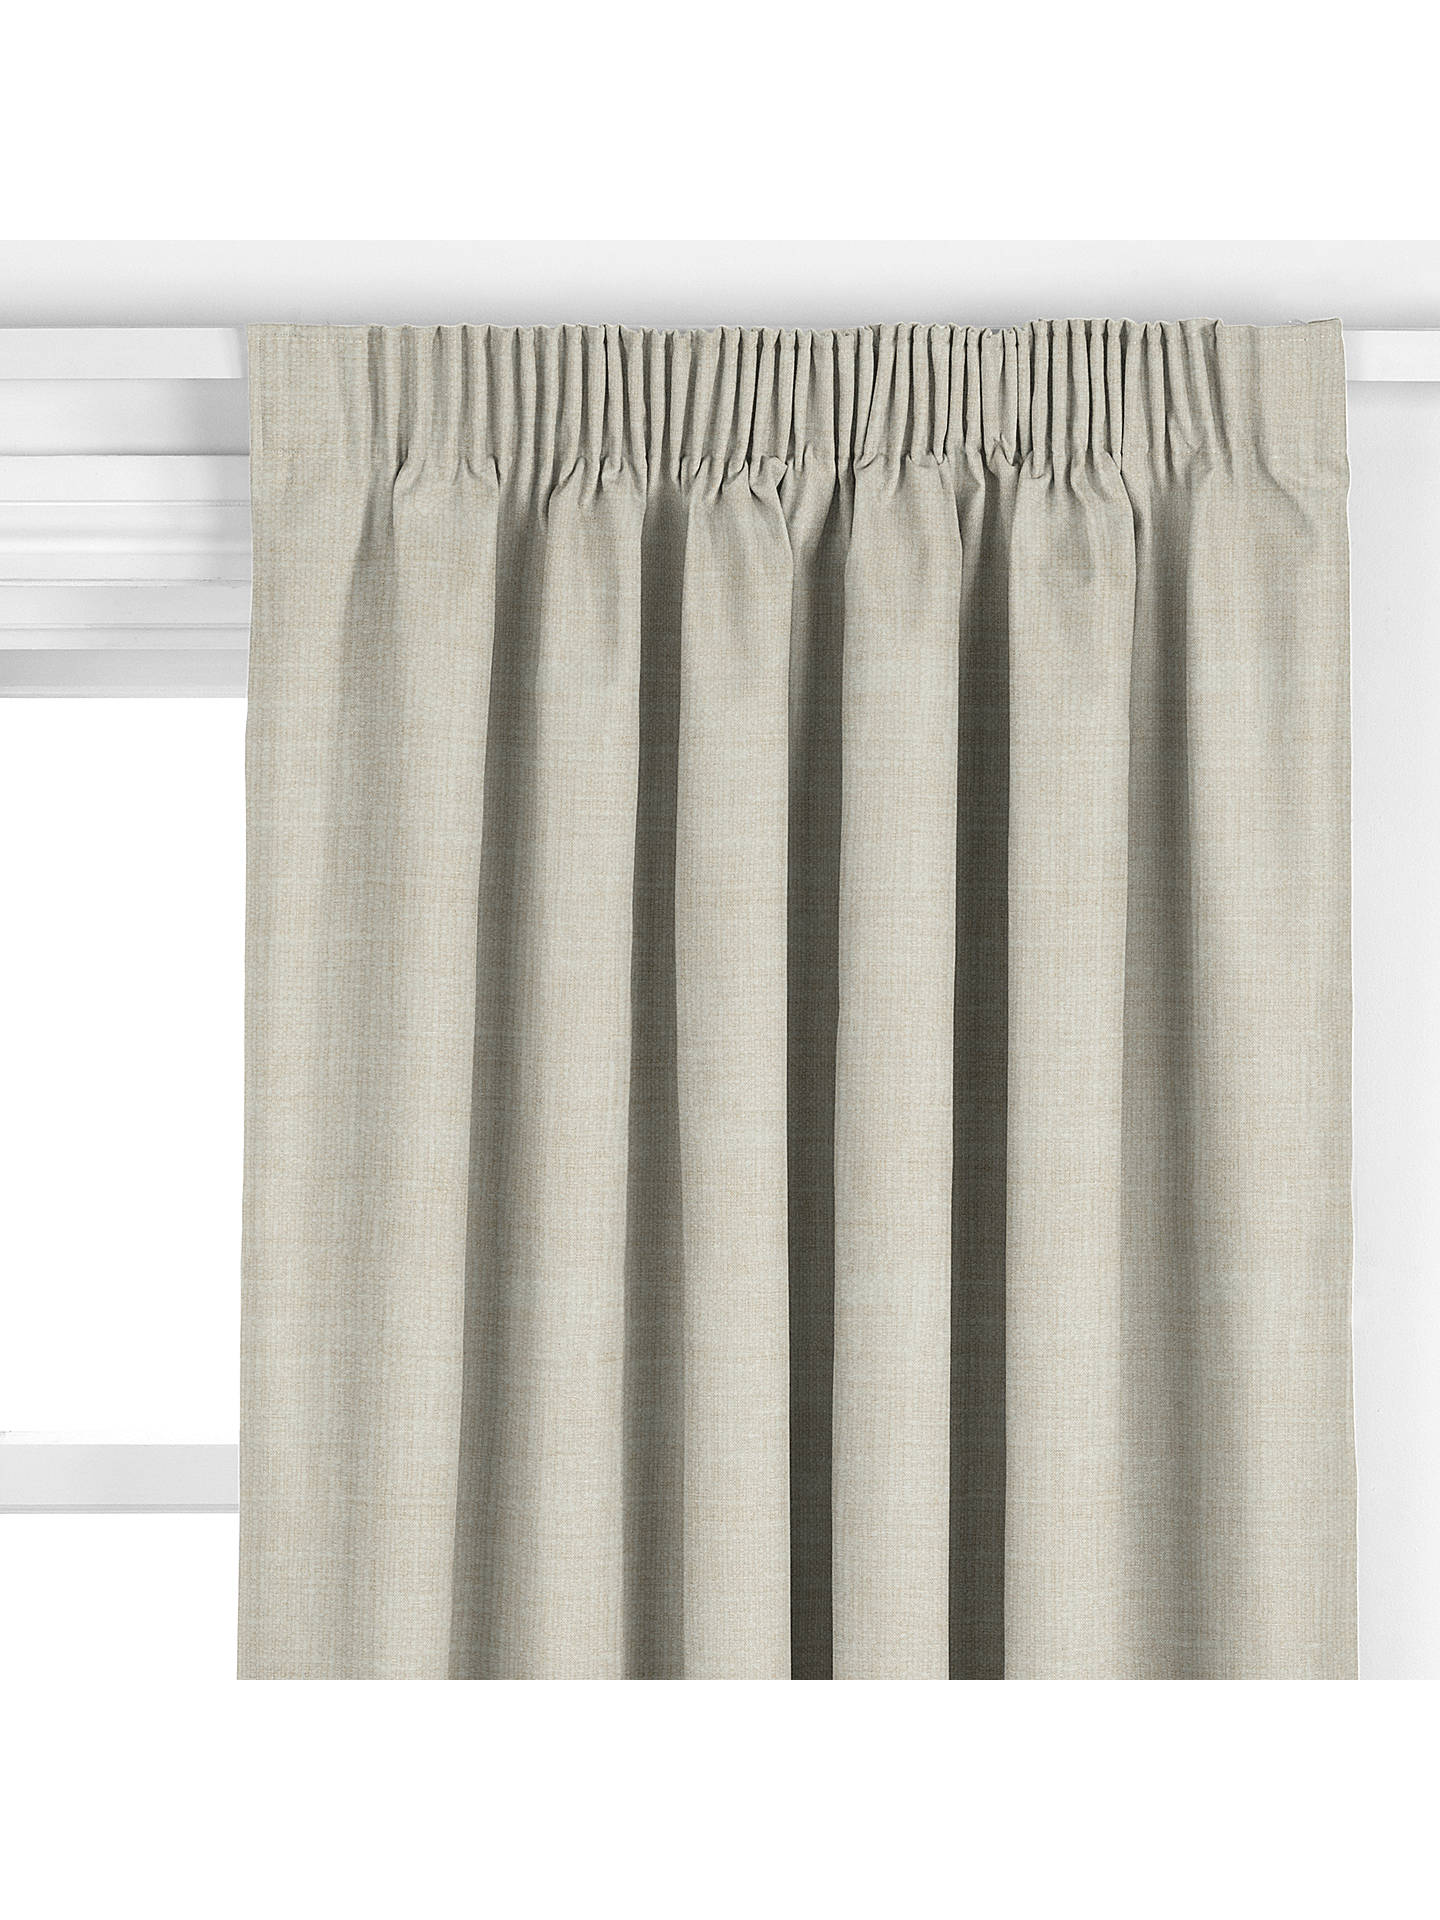 John Lewis Cotton Blend Made to Measure Curtains, Parchment